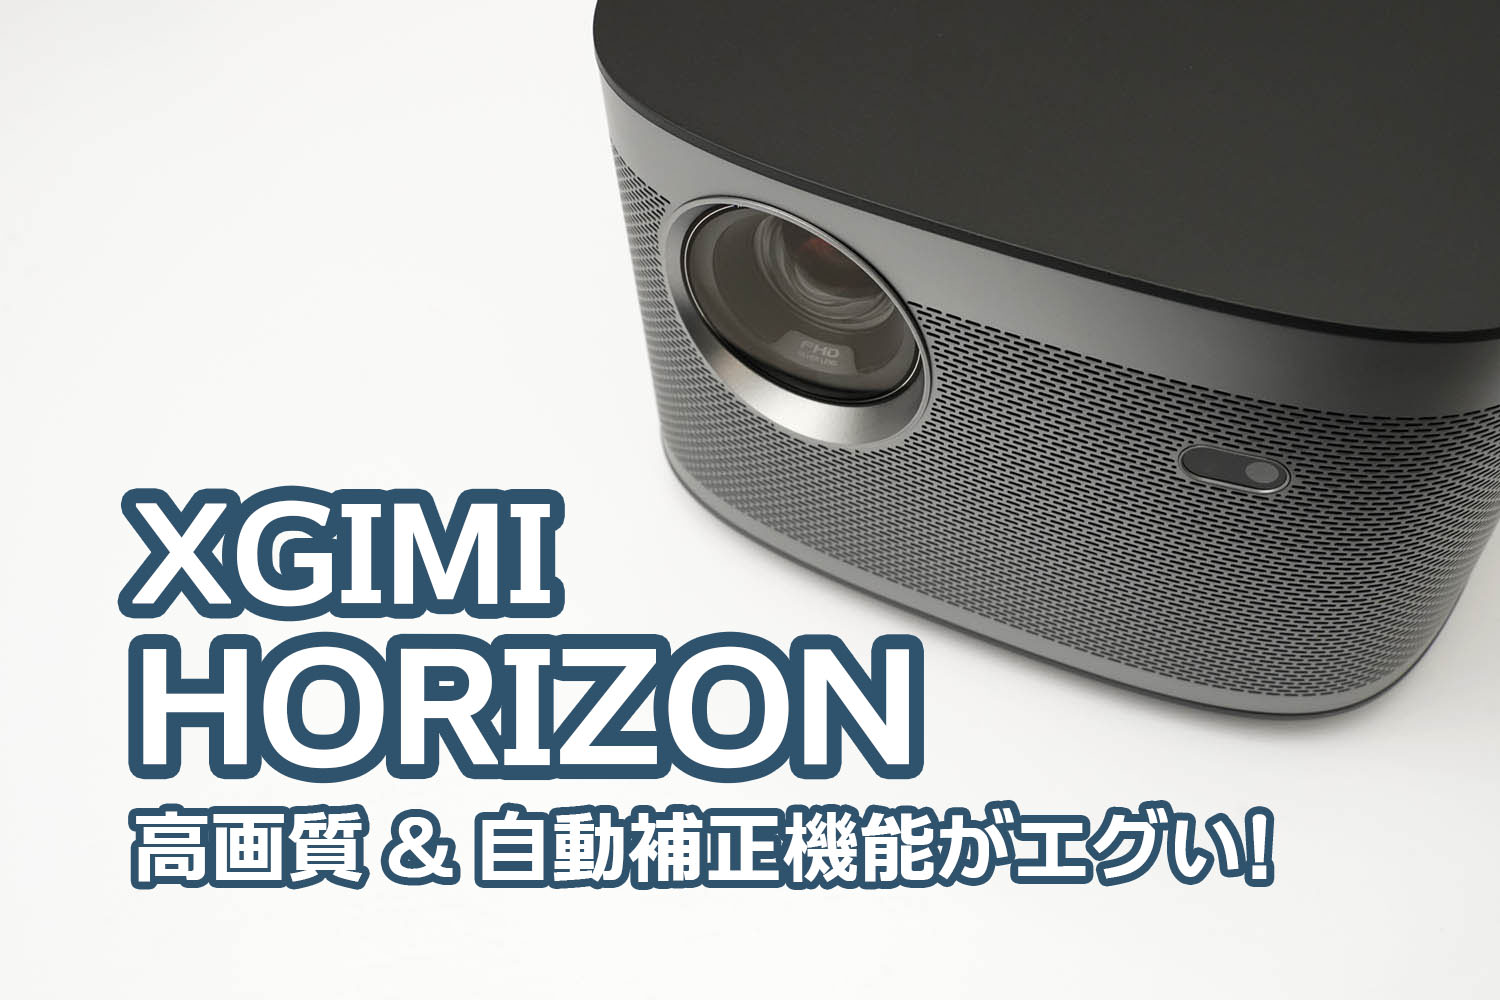 XGIMI HORIZONプロジェクターレビュー：最新の自動補正機能でどこでも 